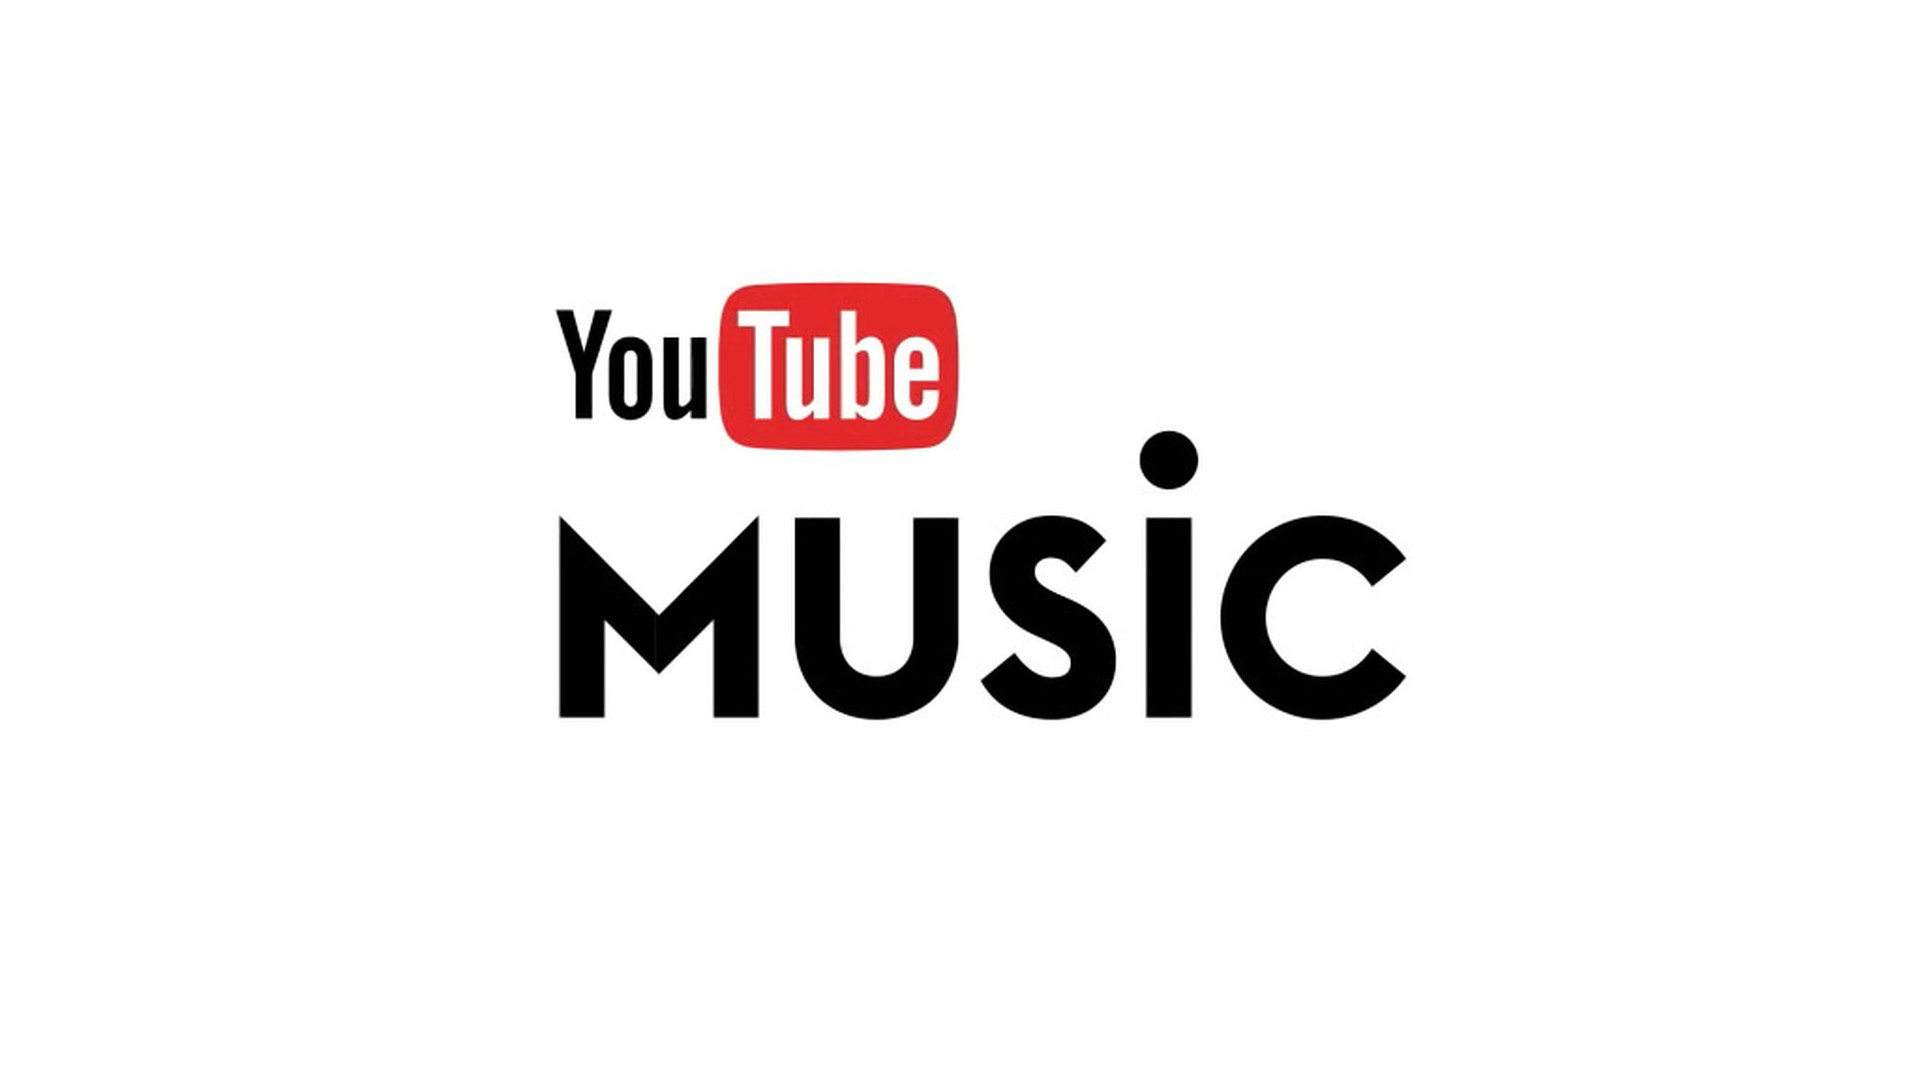 Ne официальная страница ютуб музыка. Youtube Music логотип. Ютуб Мьюзик. Значок ютуб музыка. Музыкальный логотип.